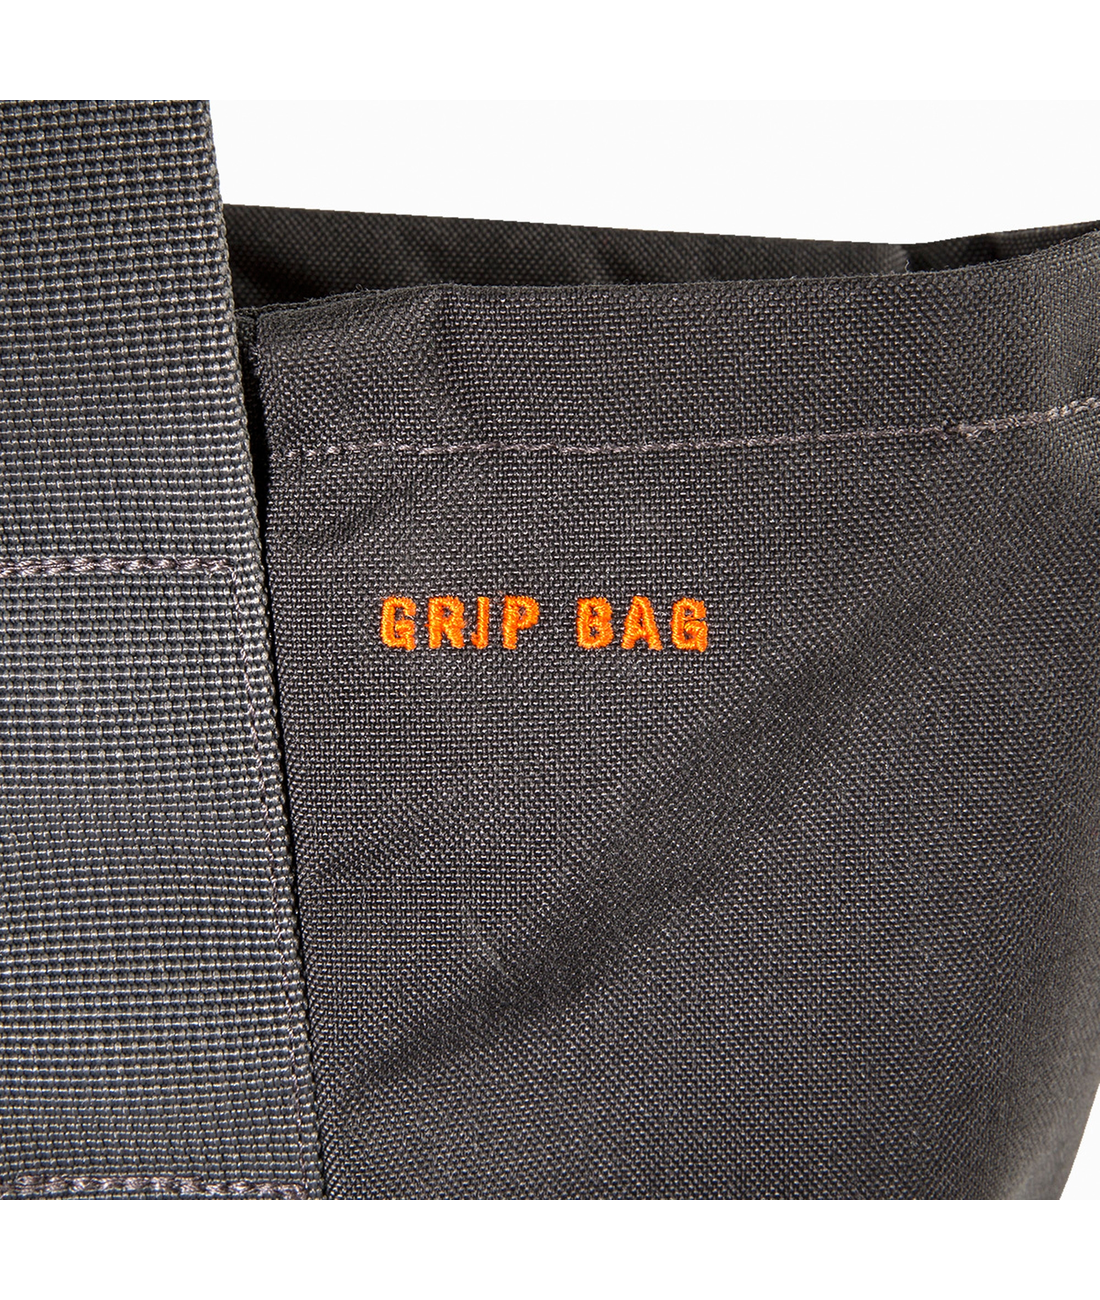 Grip Bag